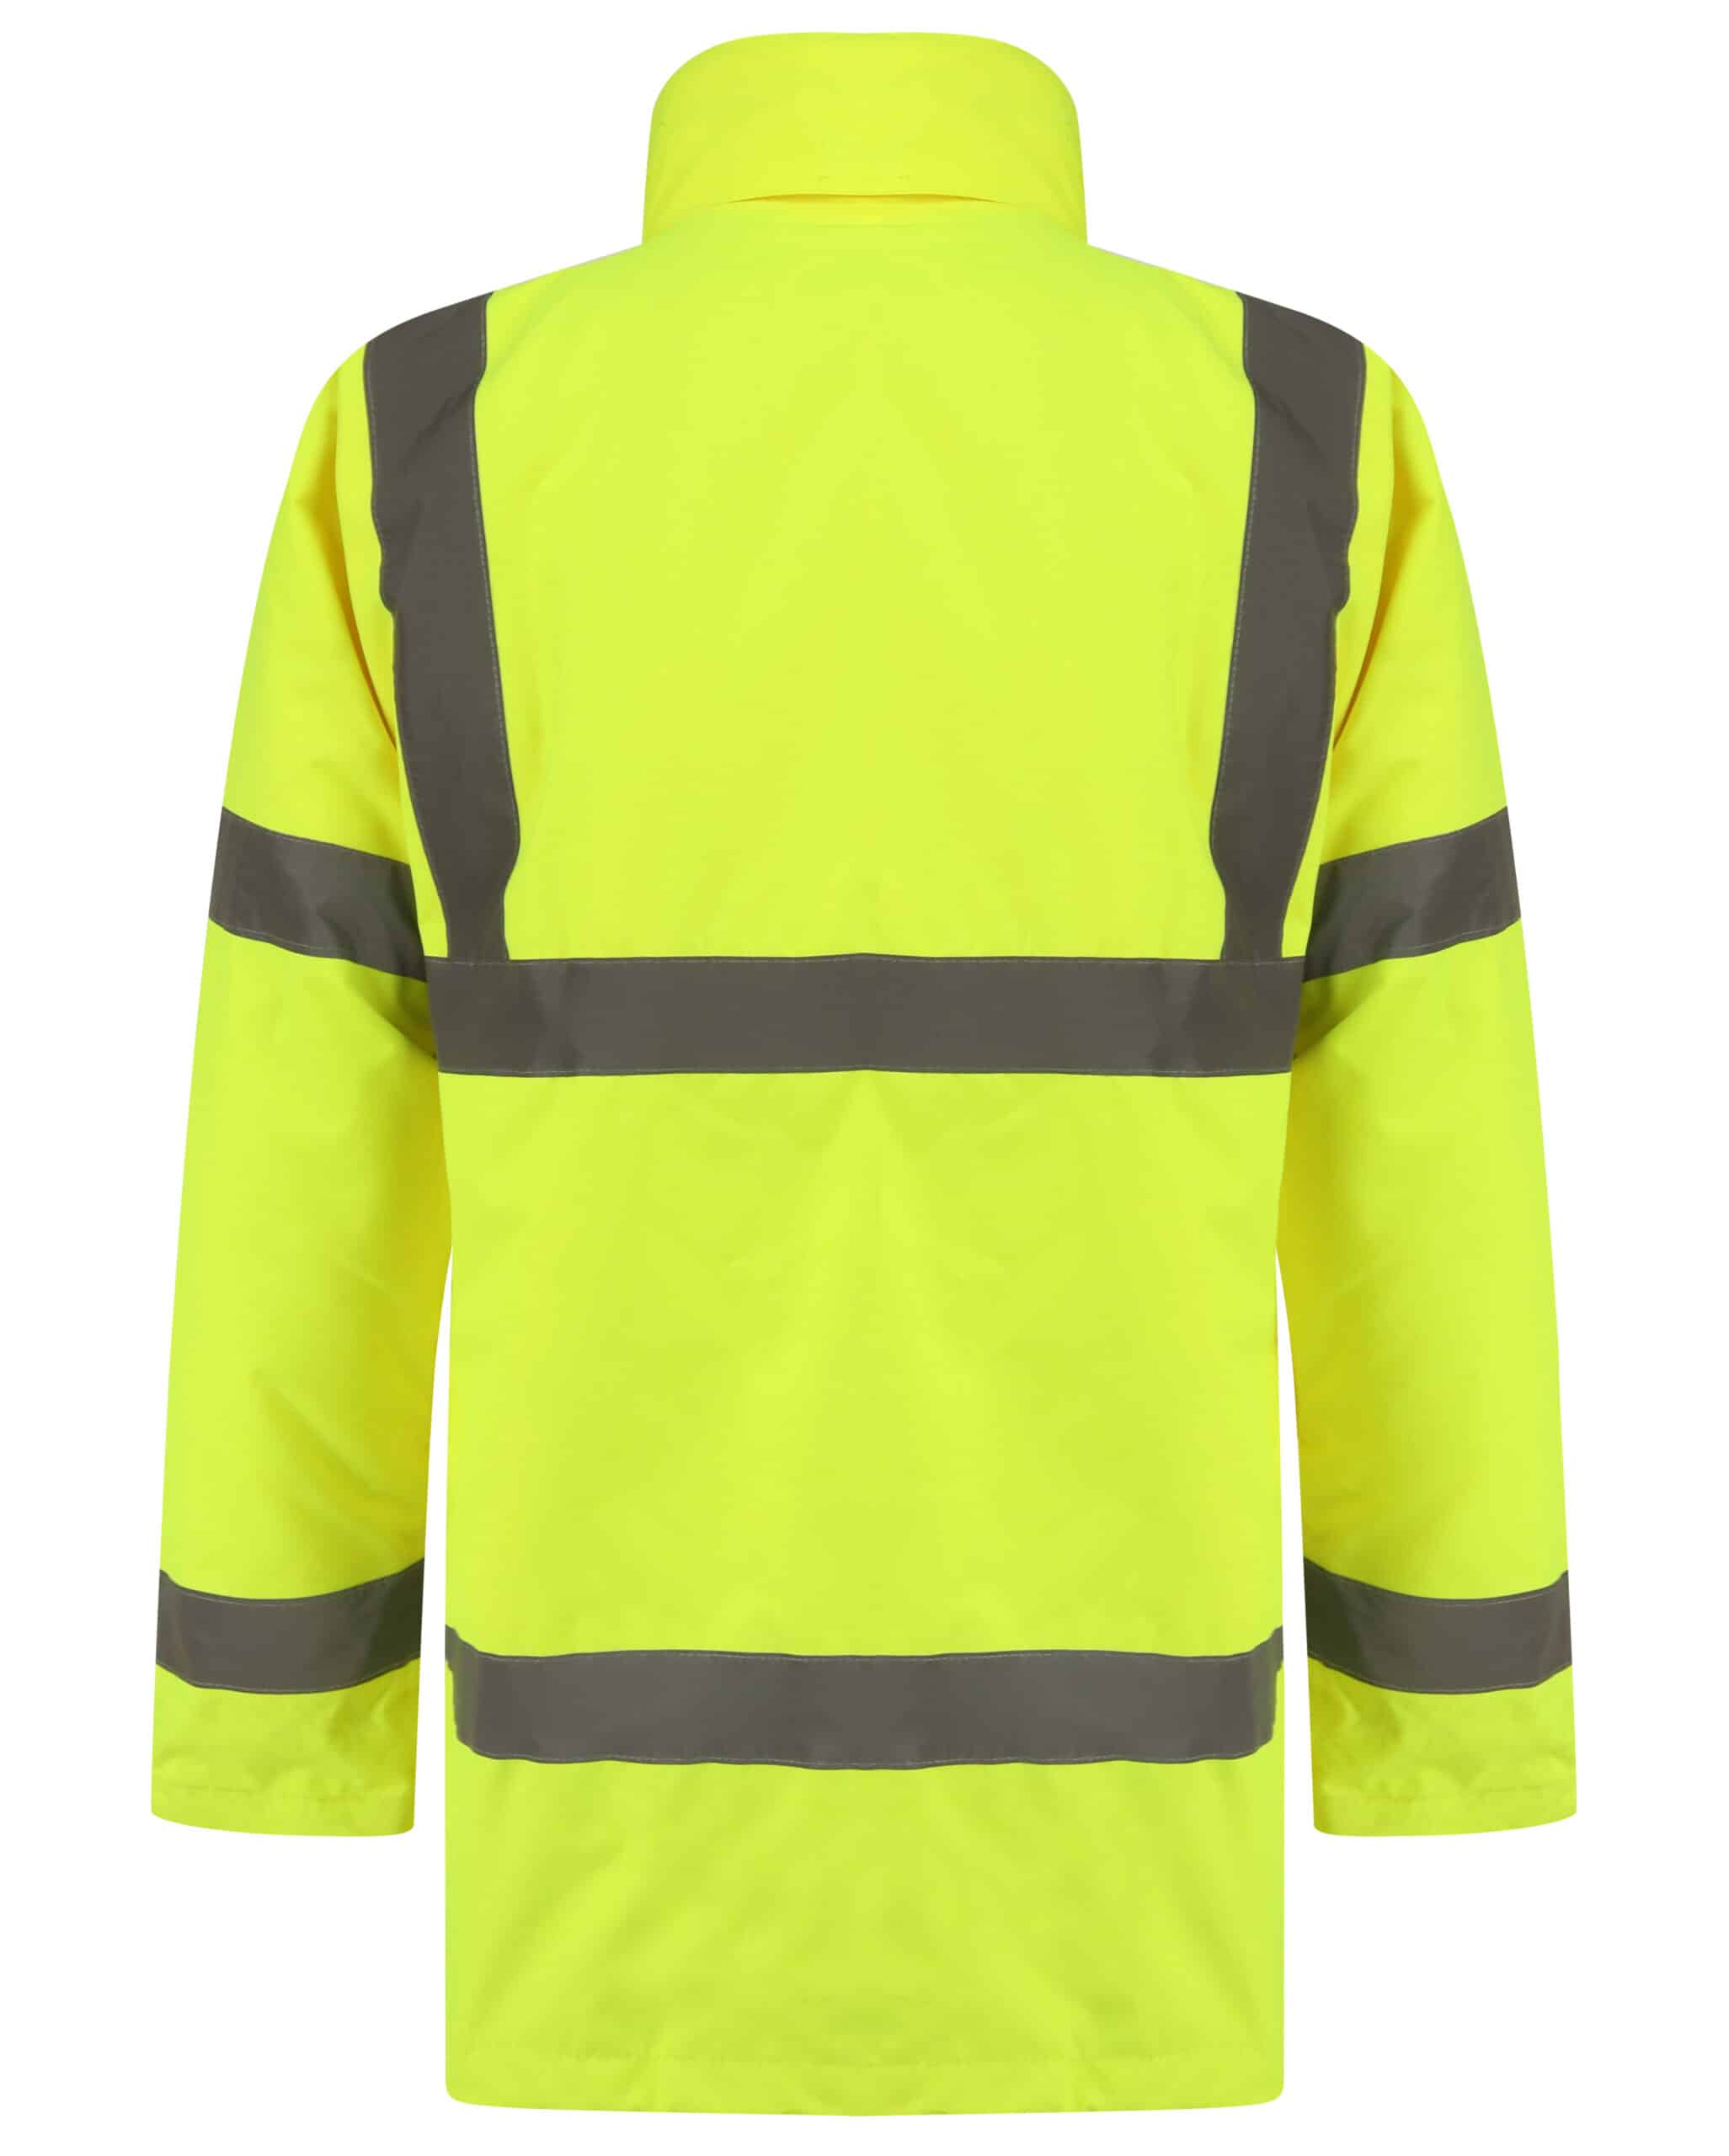 Essential Workwear Kapton Hi-Vis Traffic Jacket - Essential Workwear